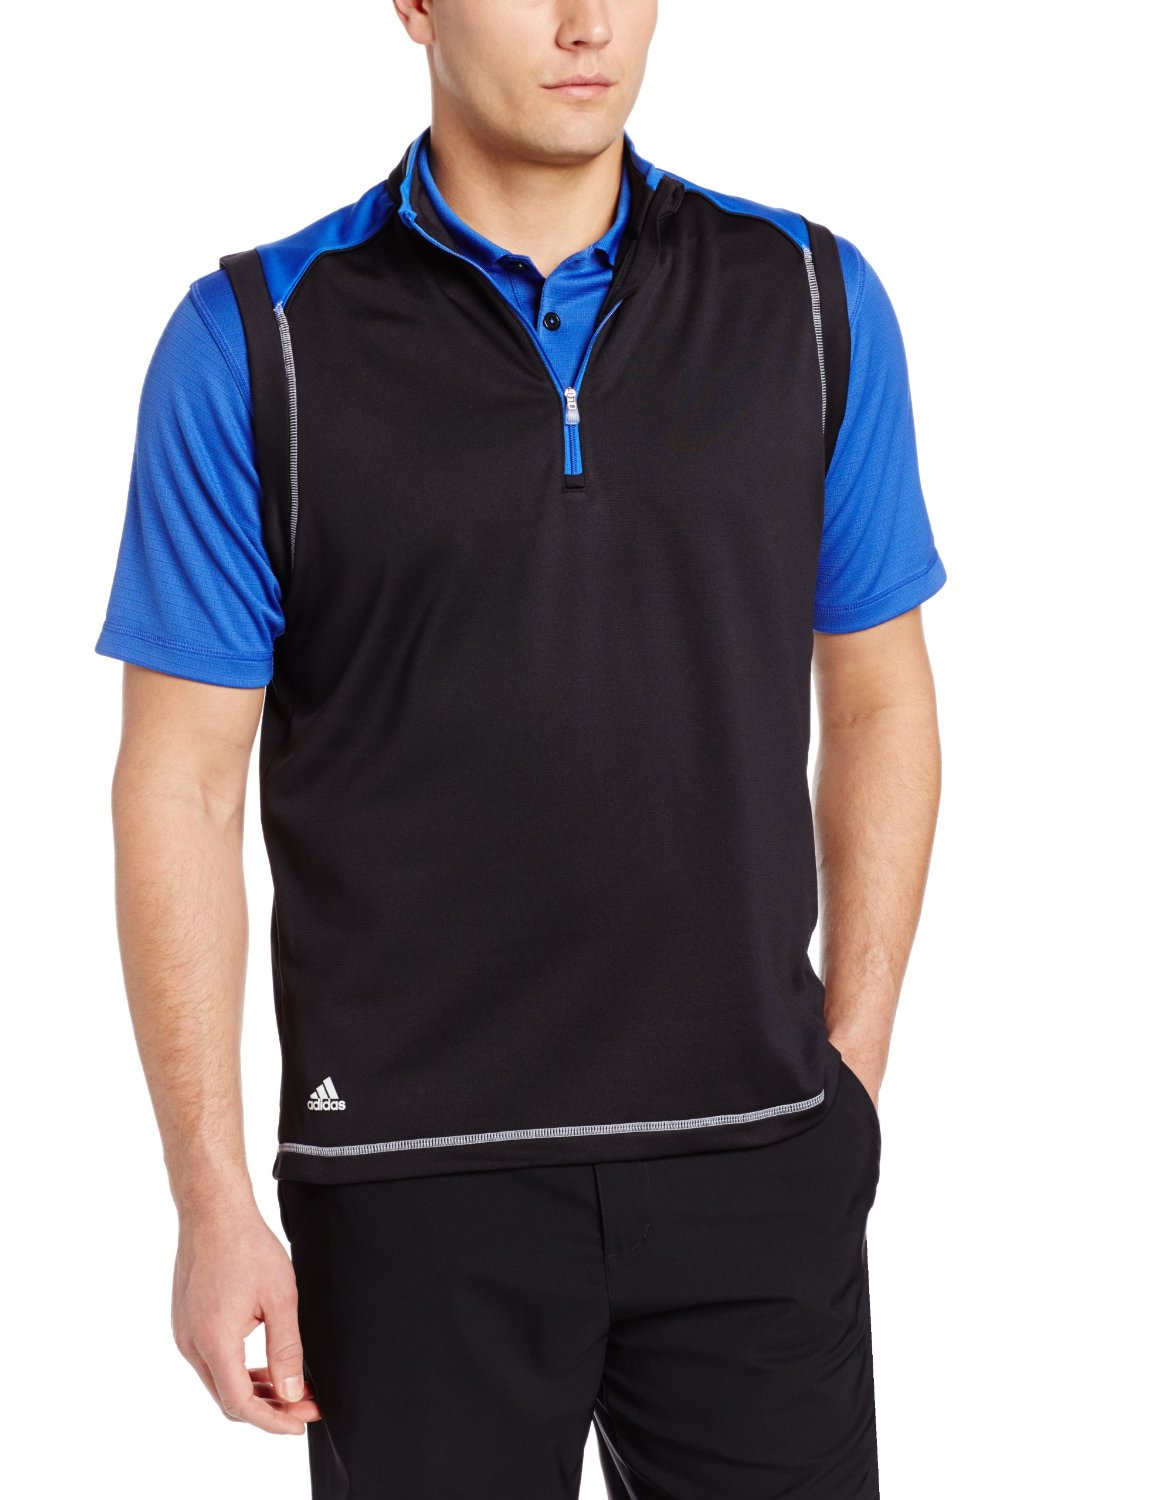 Adidas Climawarm Plus Golf Vests